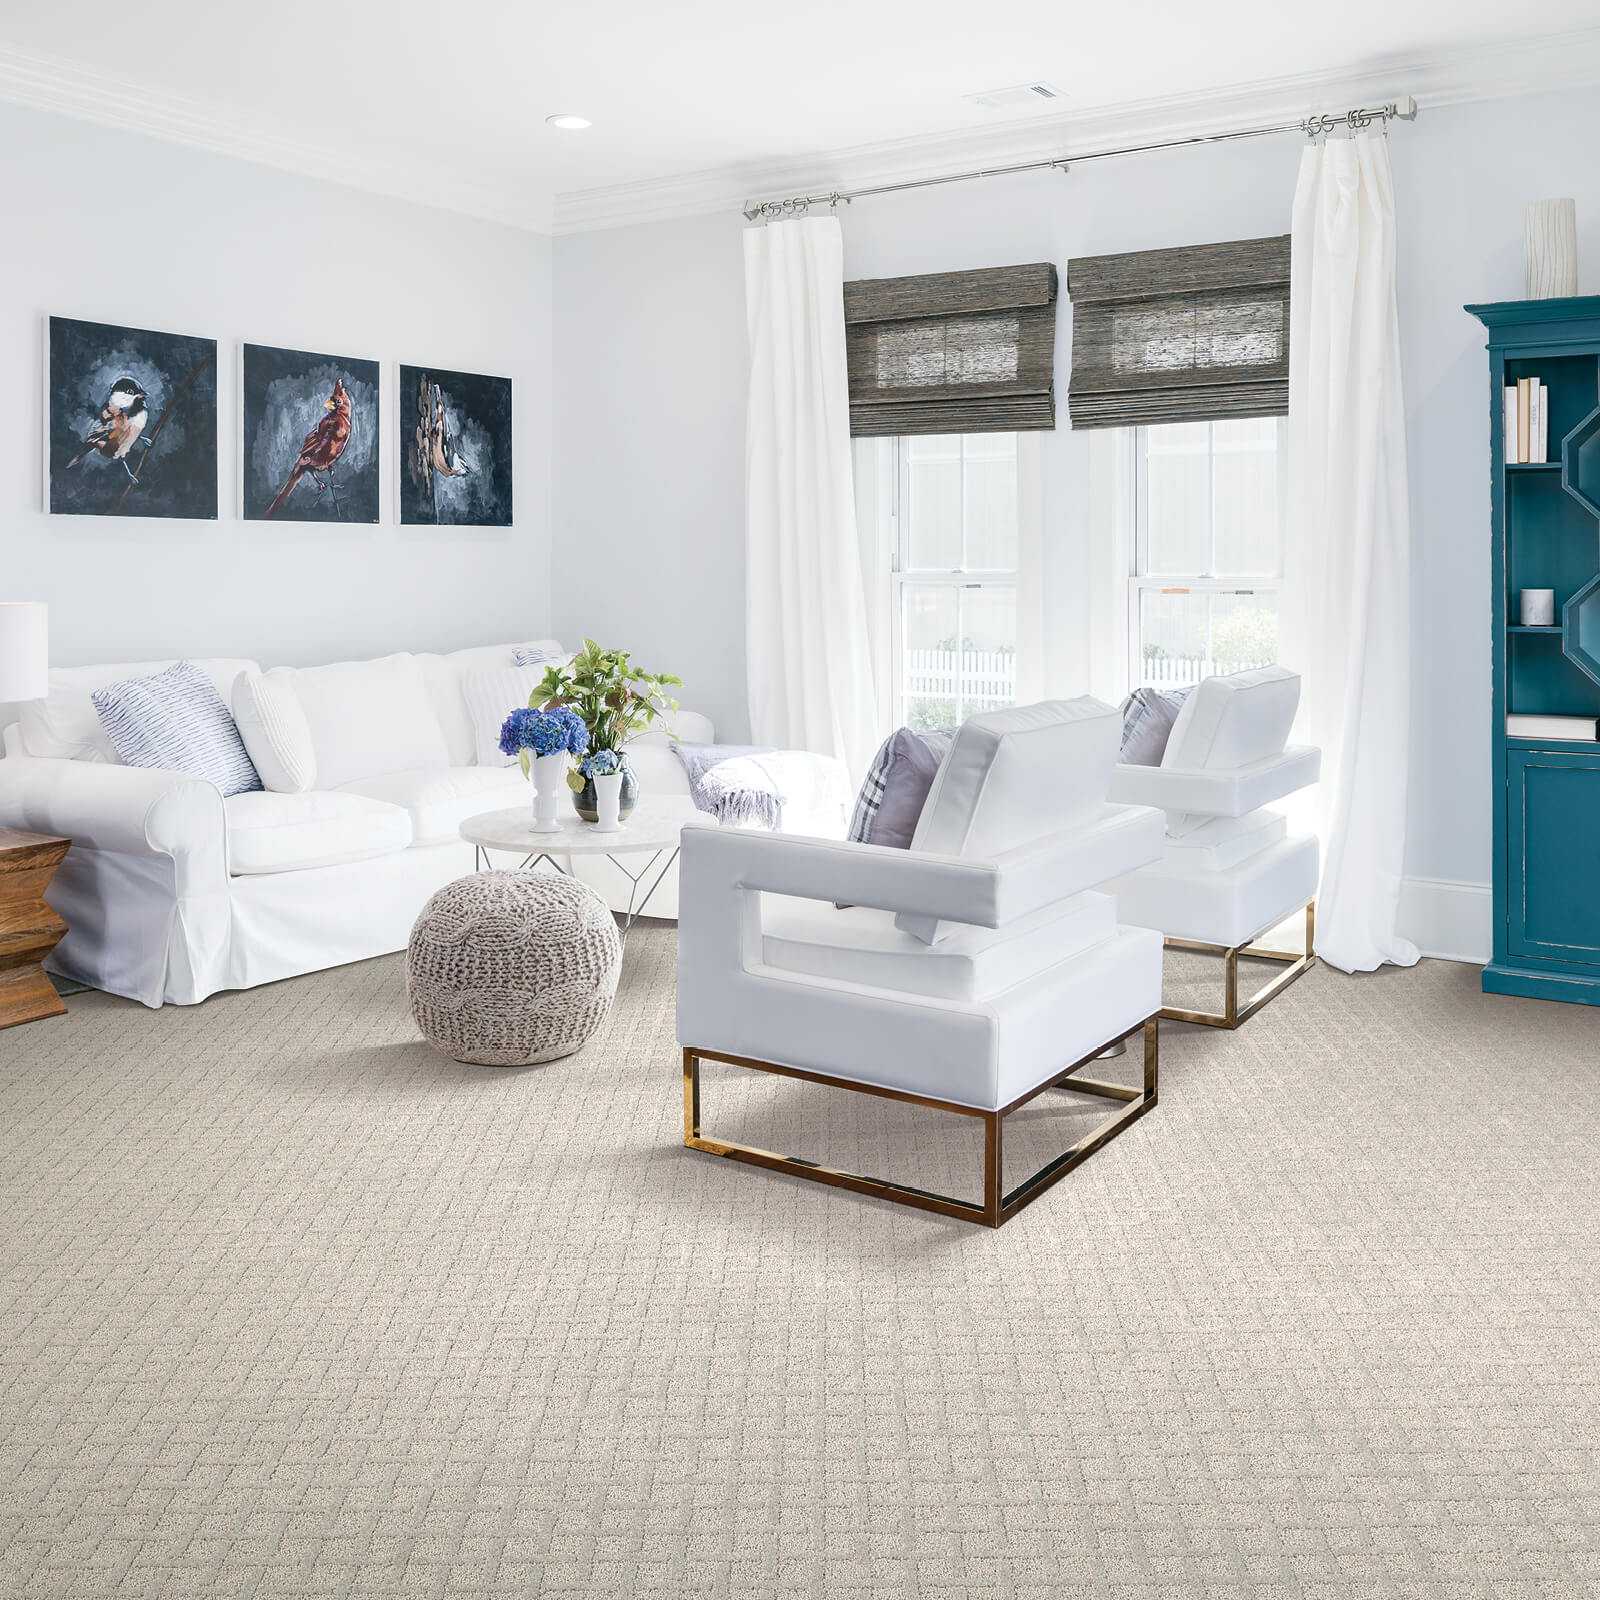 Carpeting in Living Room | Haley's Flooring & Interiors